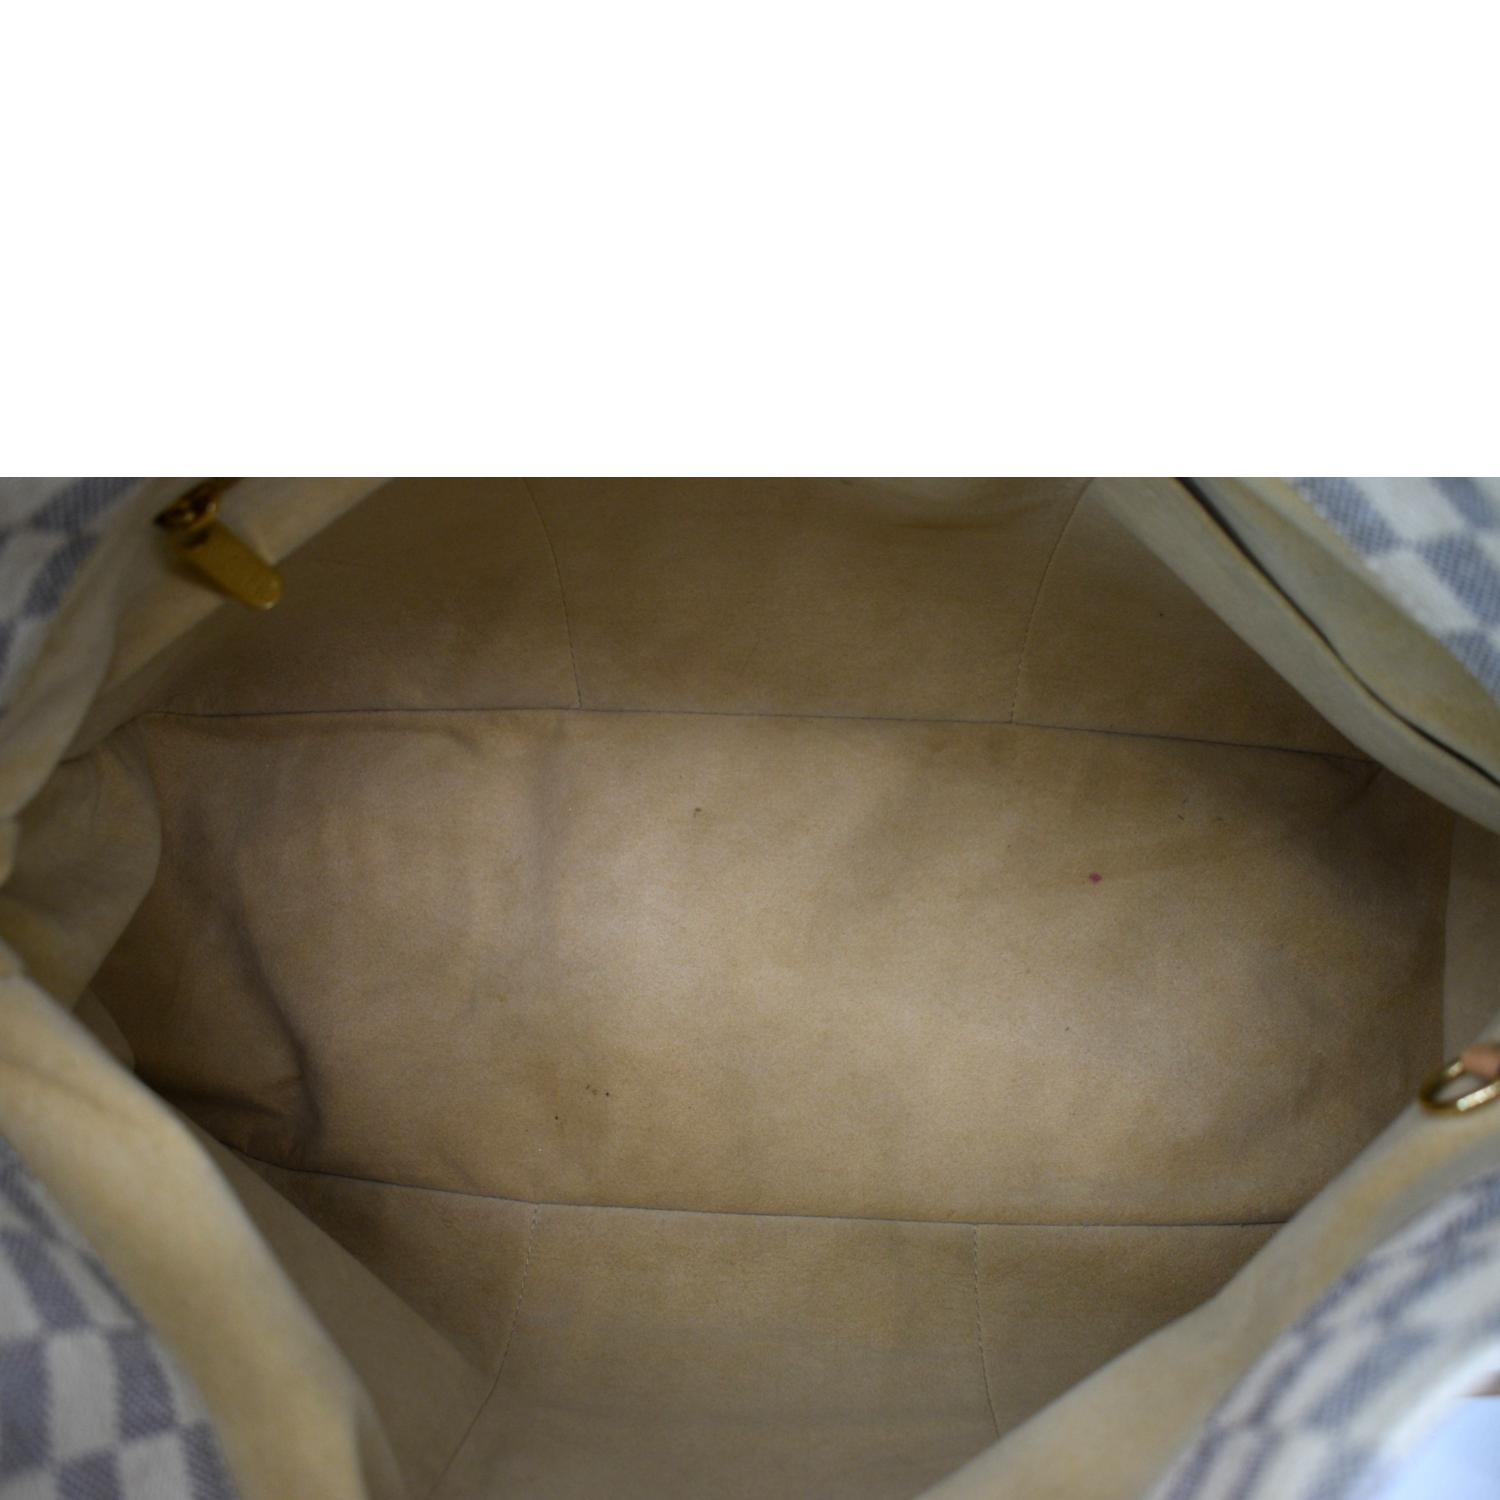 Louis Vuitton Artsy Handbag Damier MM White 2404861